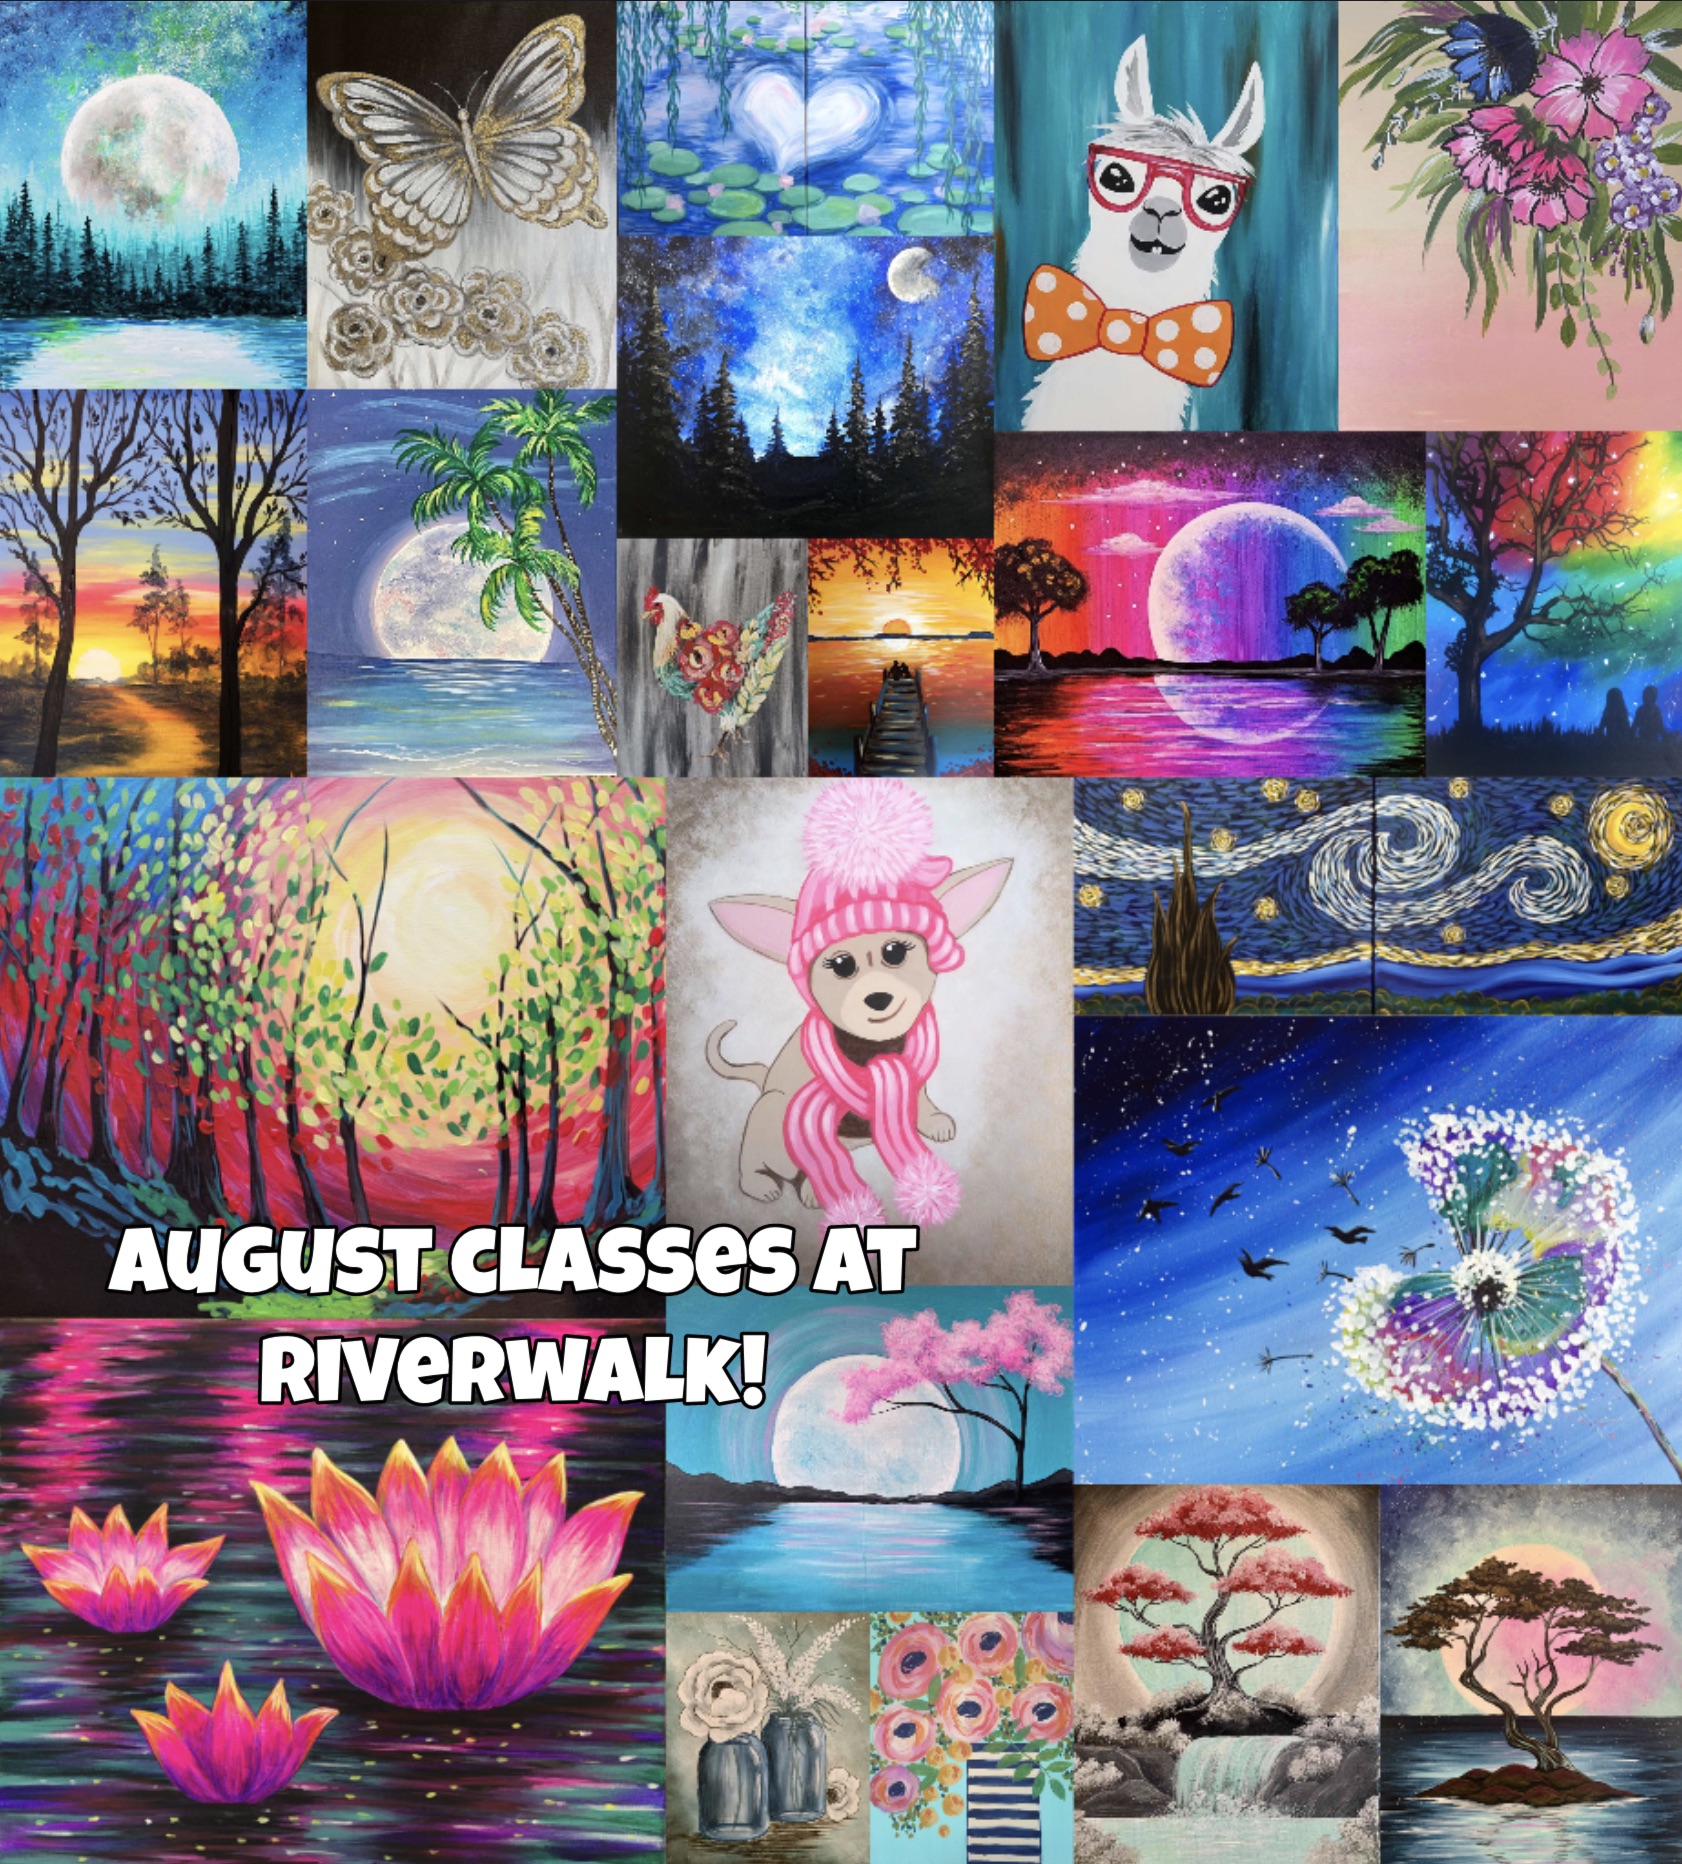 Riverwalk's August Calendar